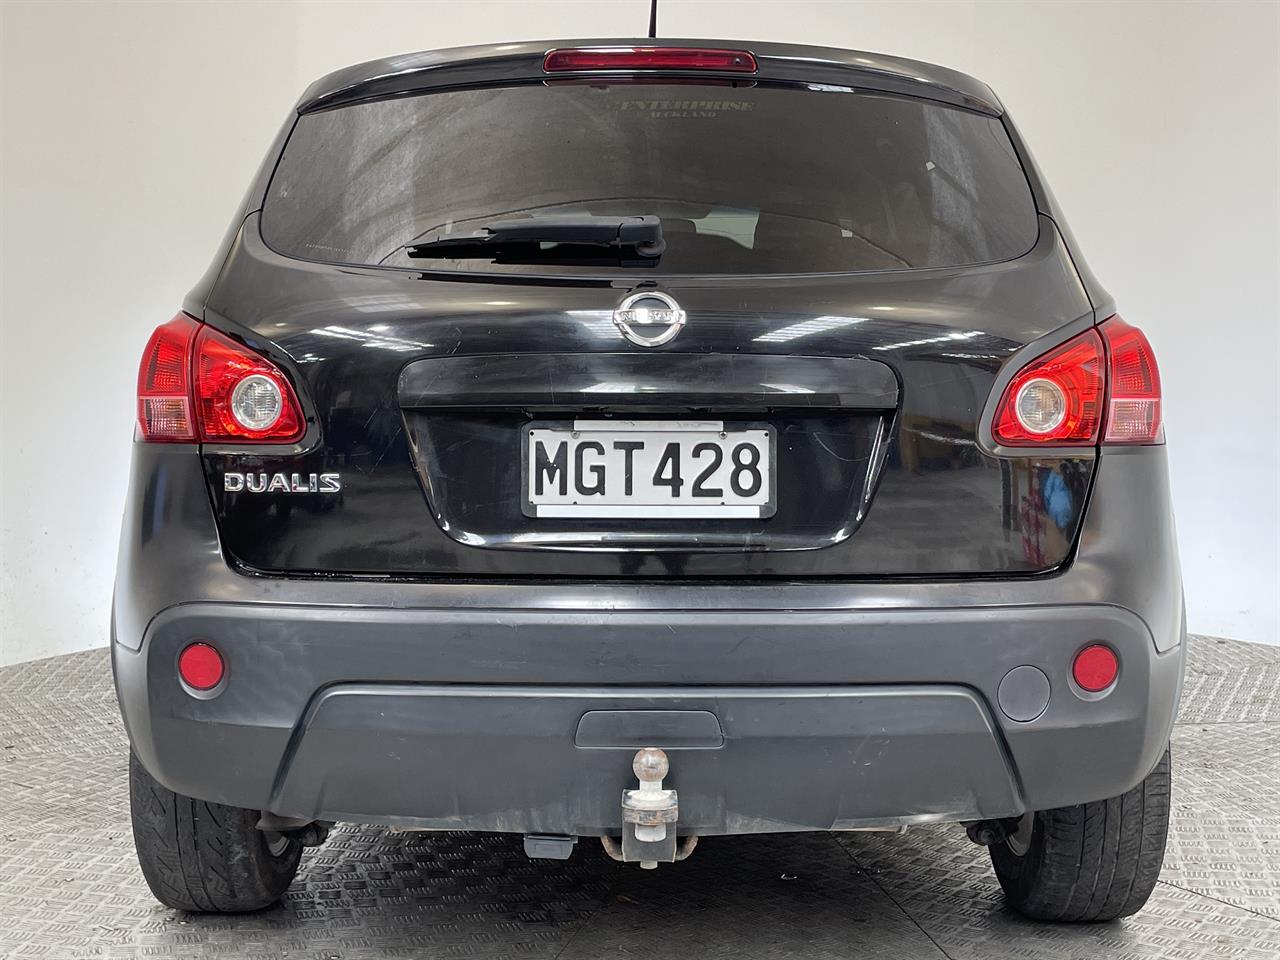 2008 Nissan Dualis